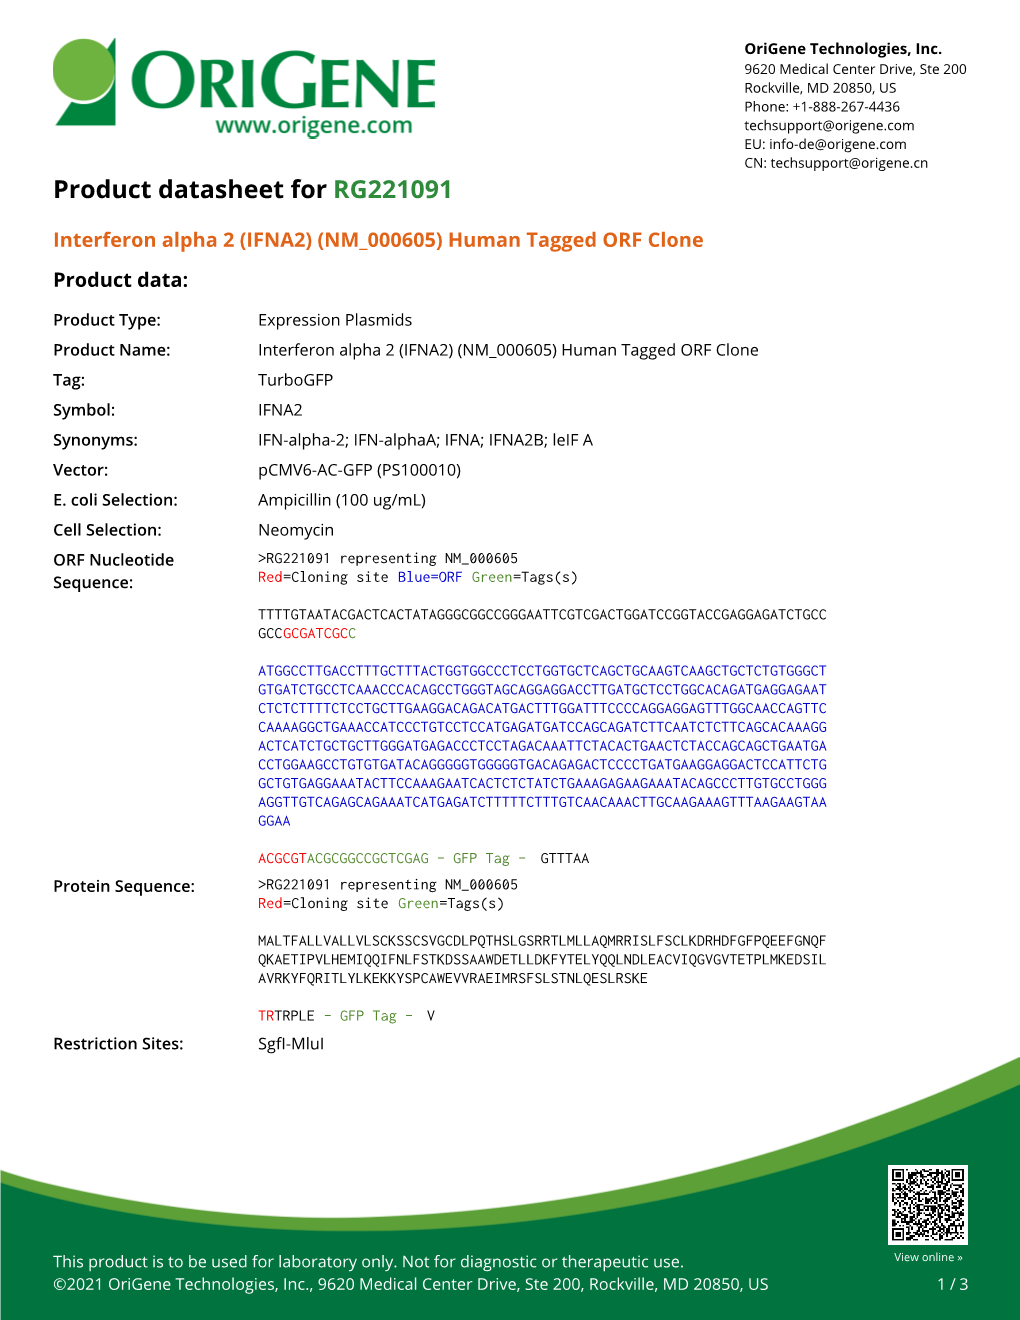 Interferon Alpha 2 (IFNA2) (NM 000605) Human Tagged ORF Clone Product Data